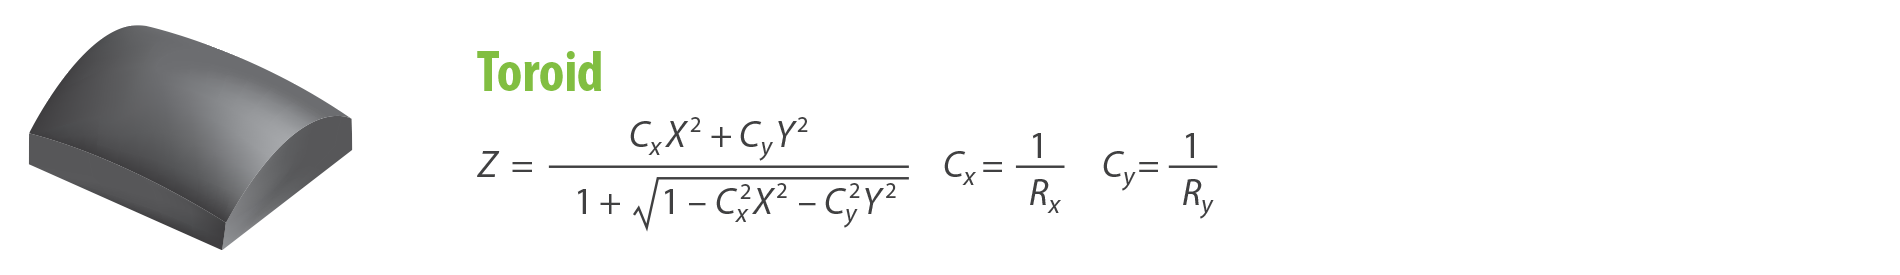 Toroid formula